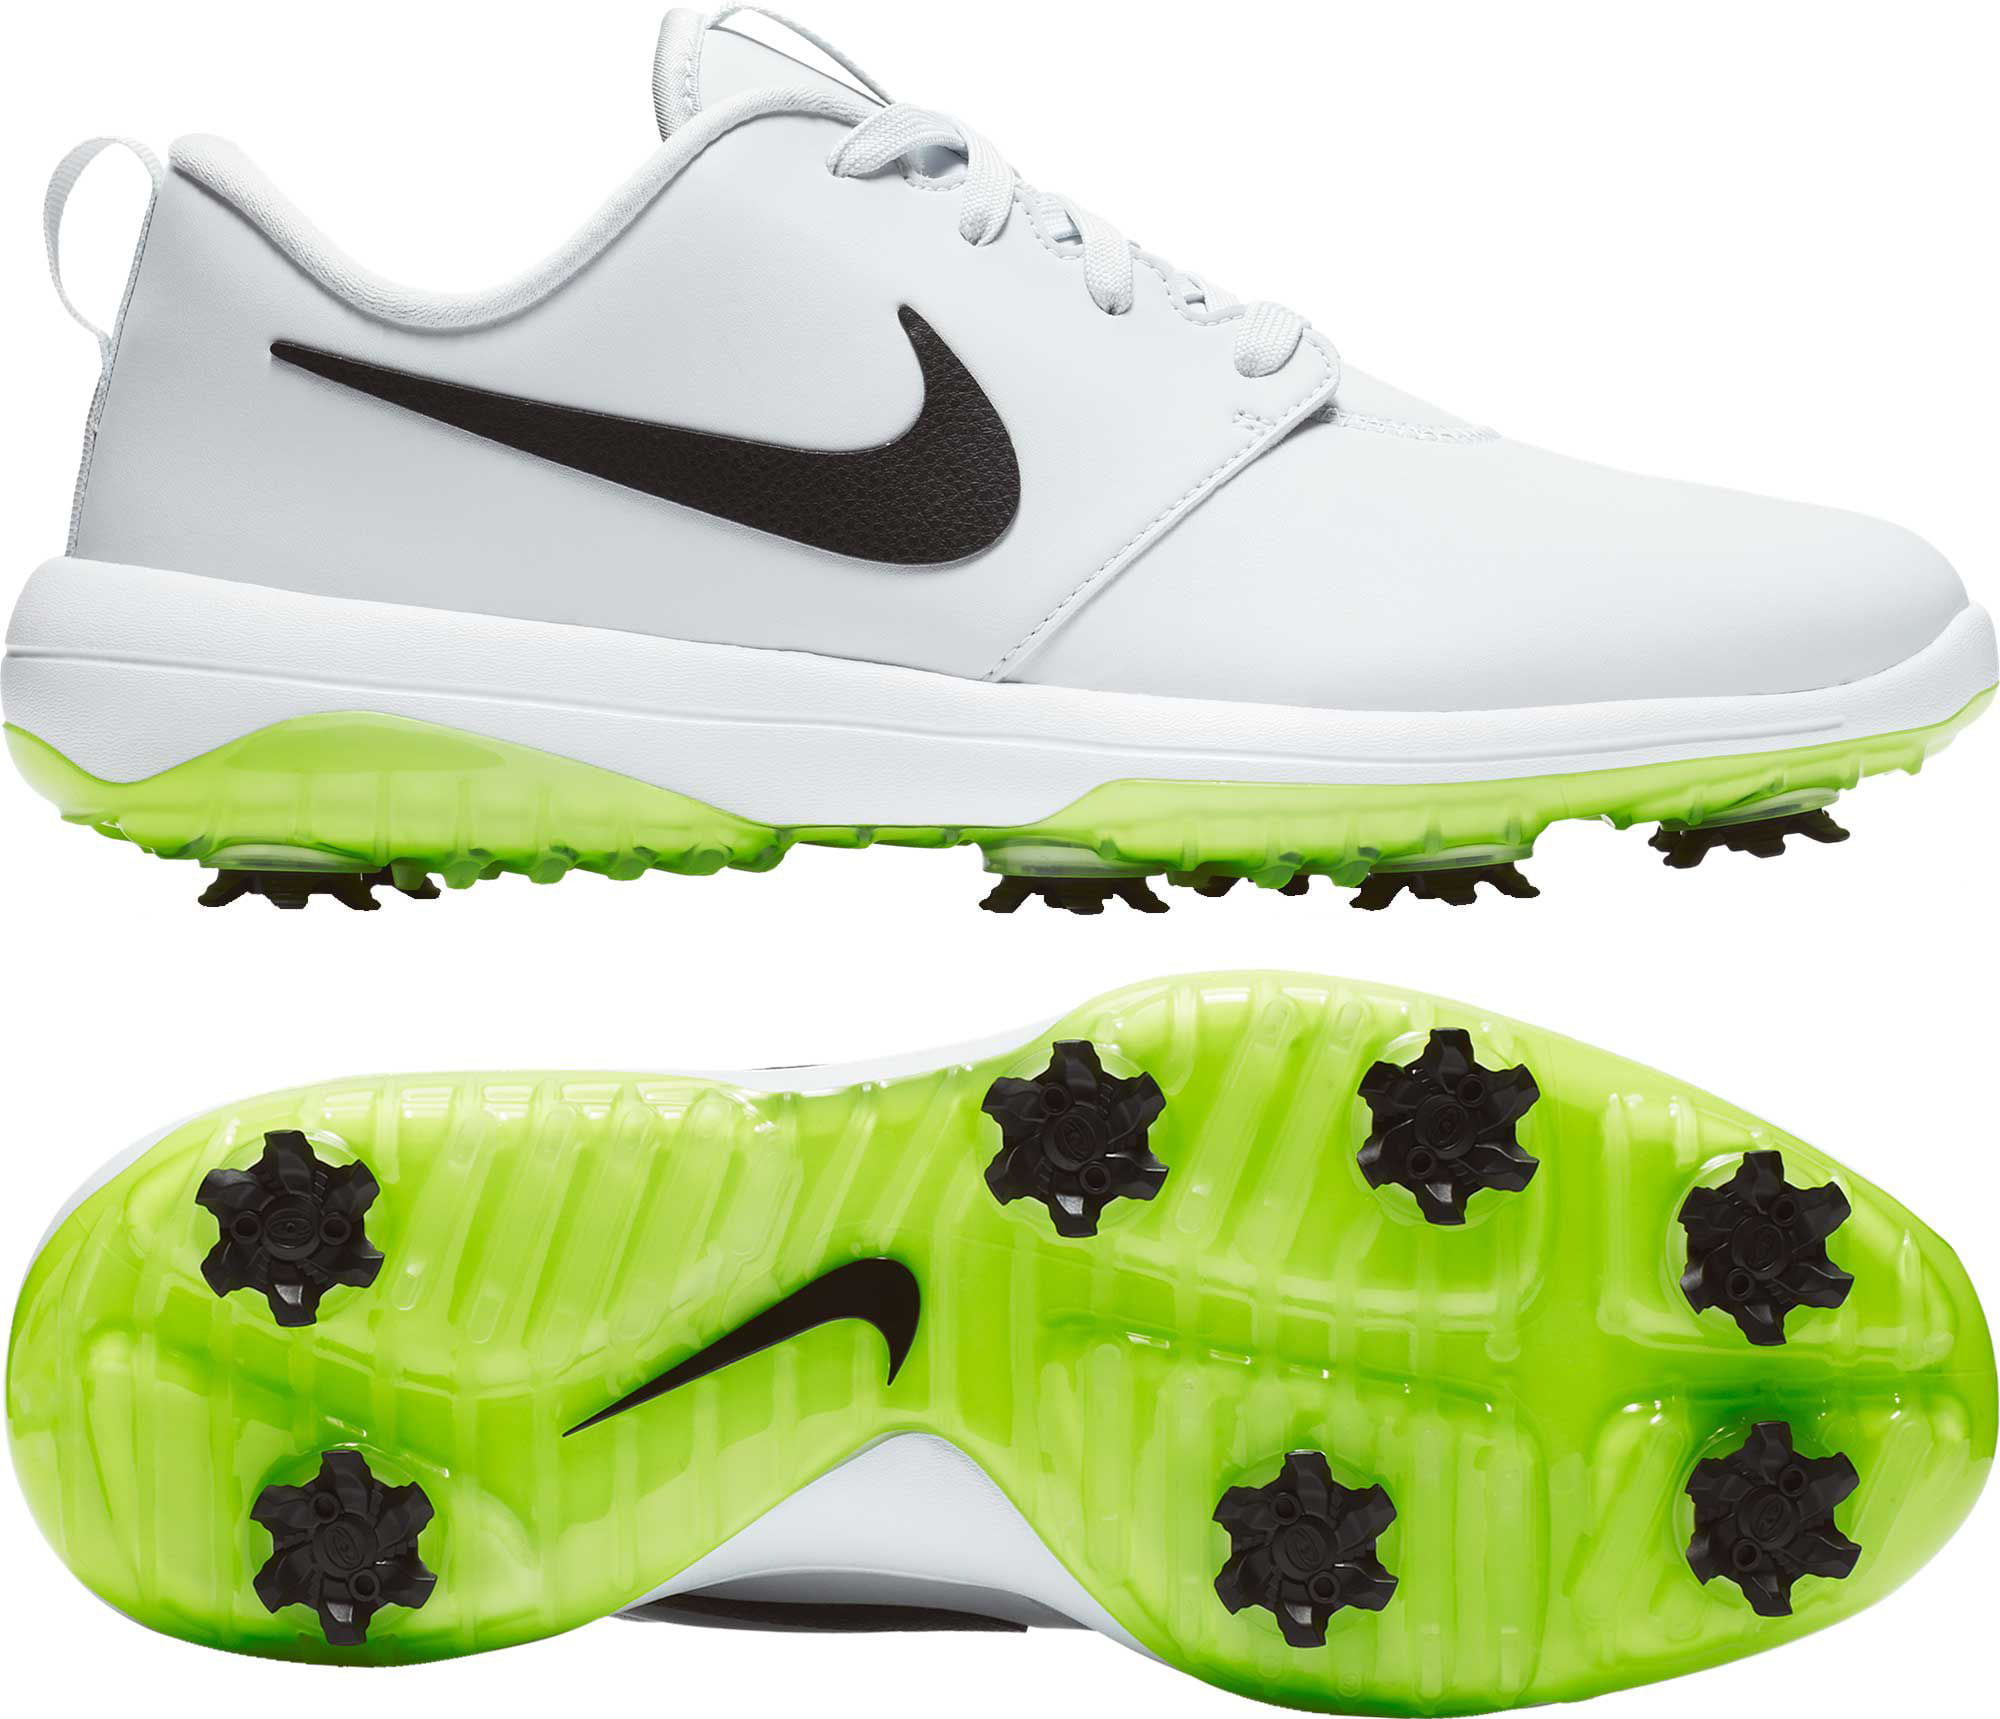 Nike Men's Roshe G Tour Golf Shoes - Walmart.com